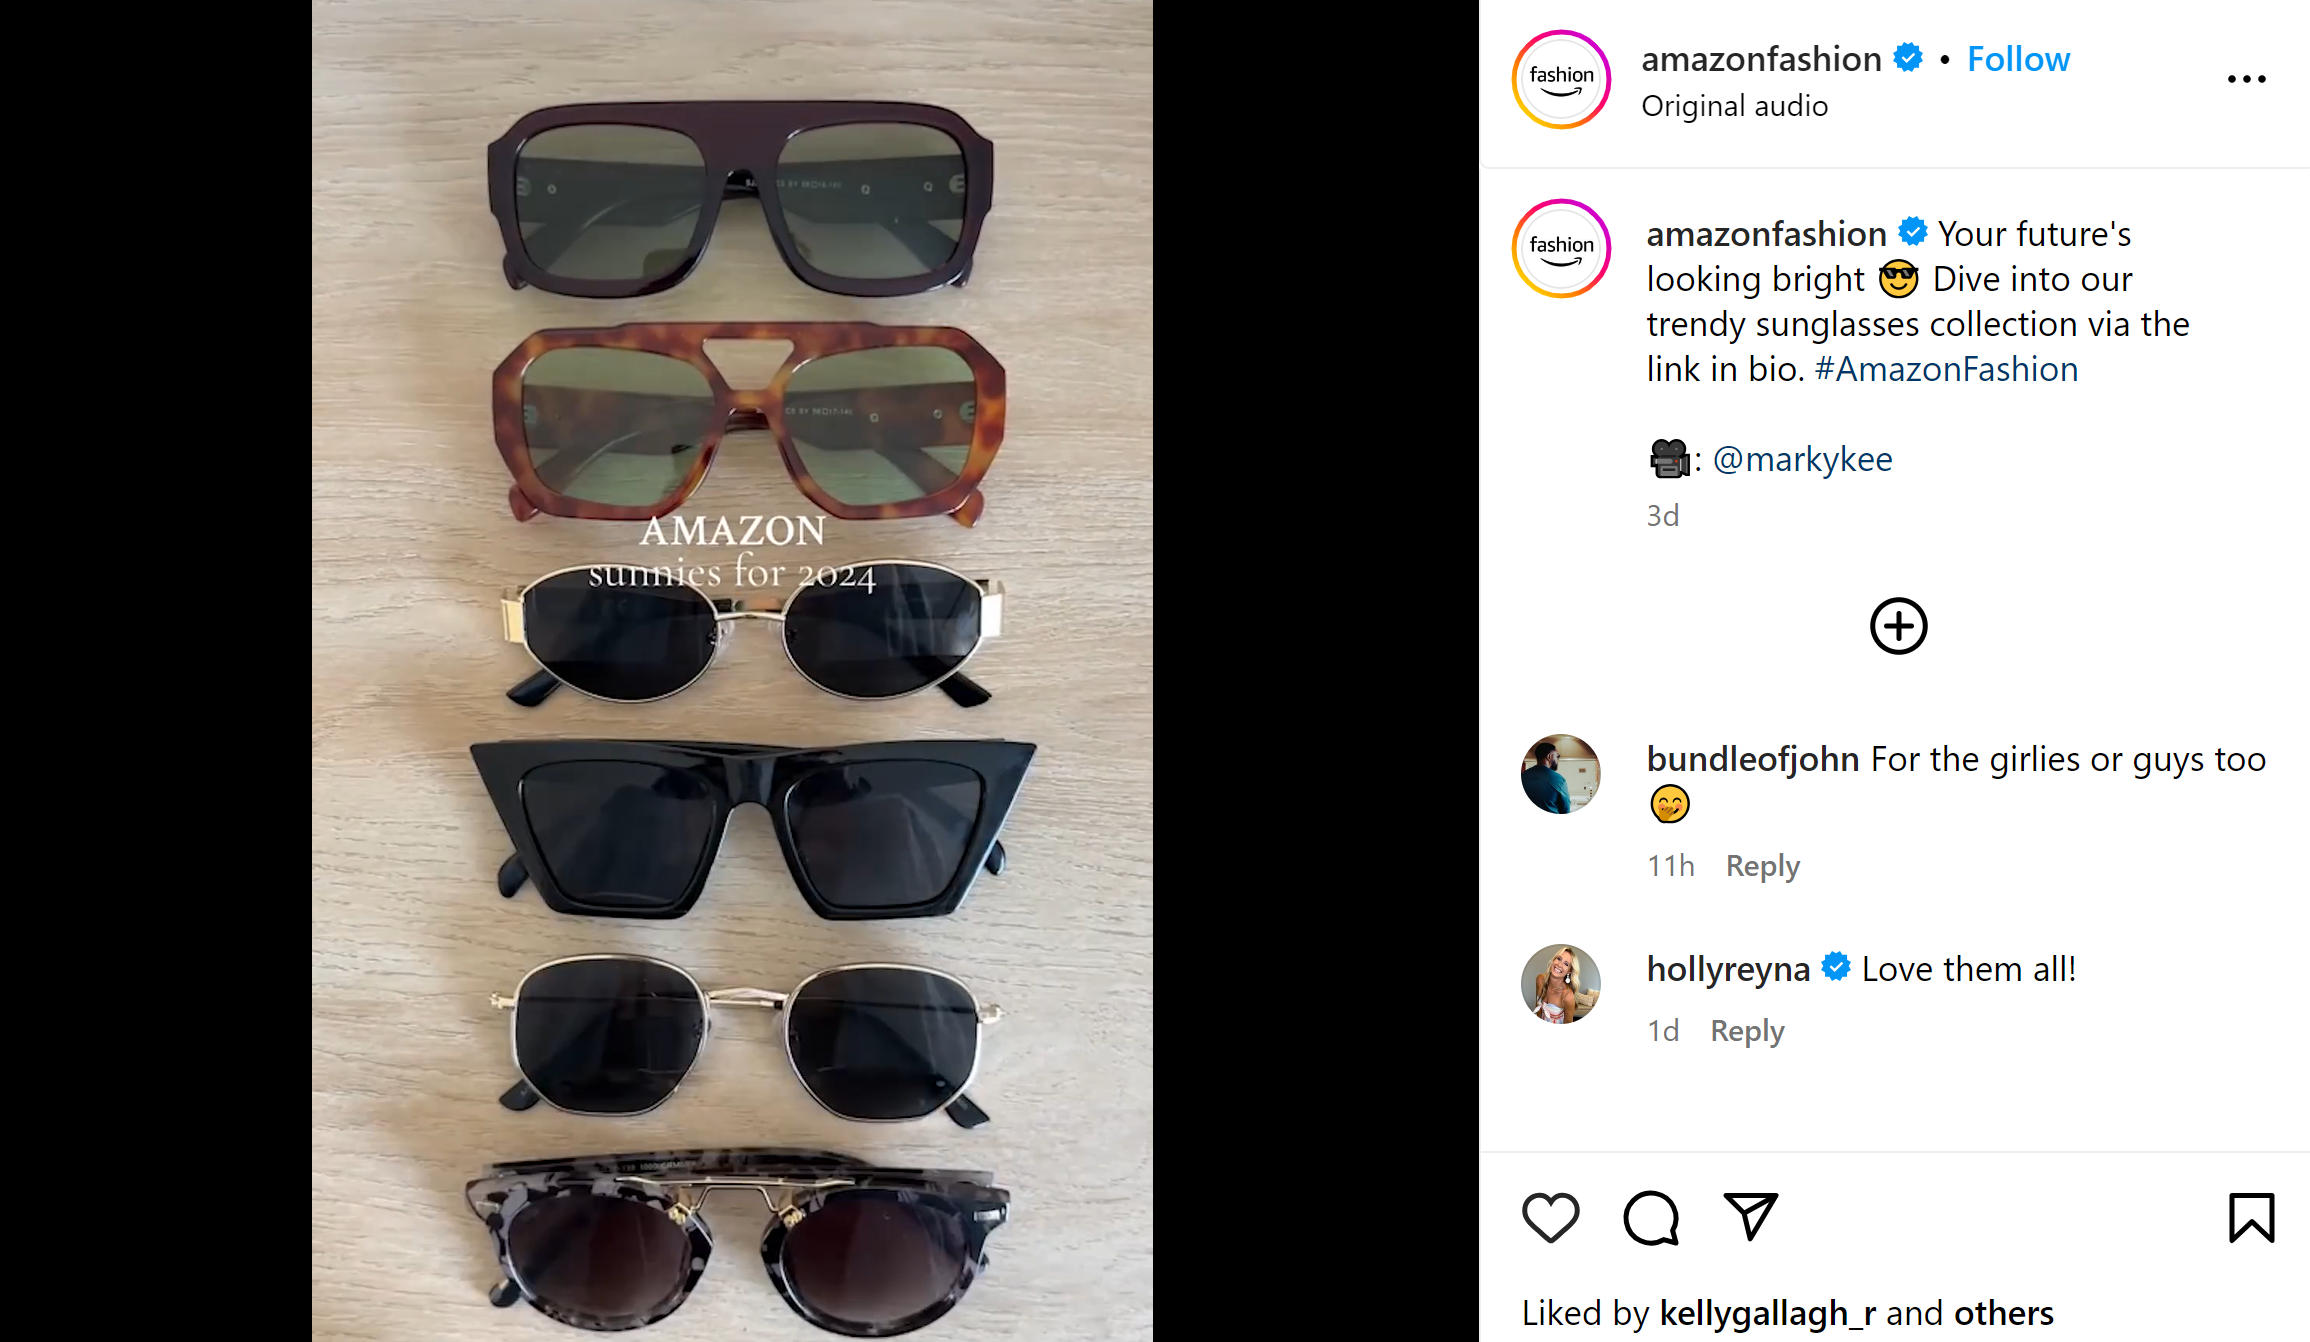 Instagram post advertising sunglasses